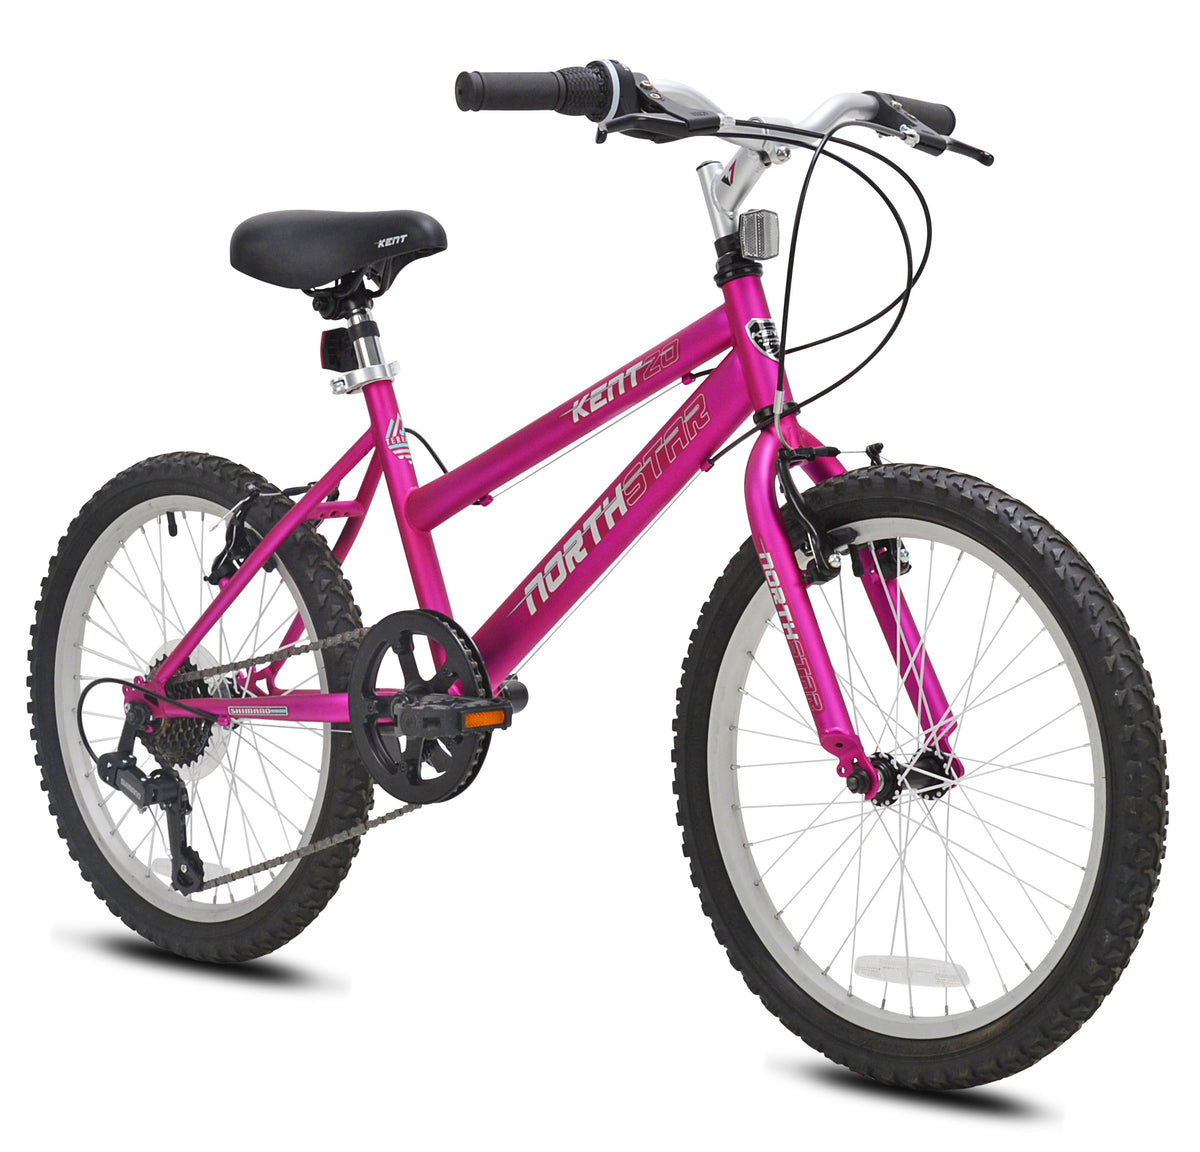 20" Kent Northstar (Refurbished) | Mountain Bike for Kids Ages 7-13